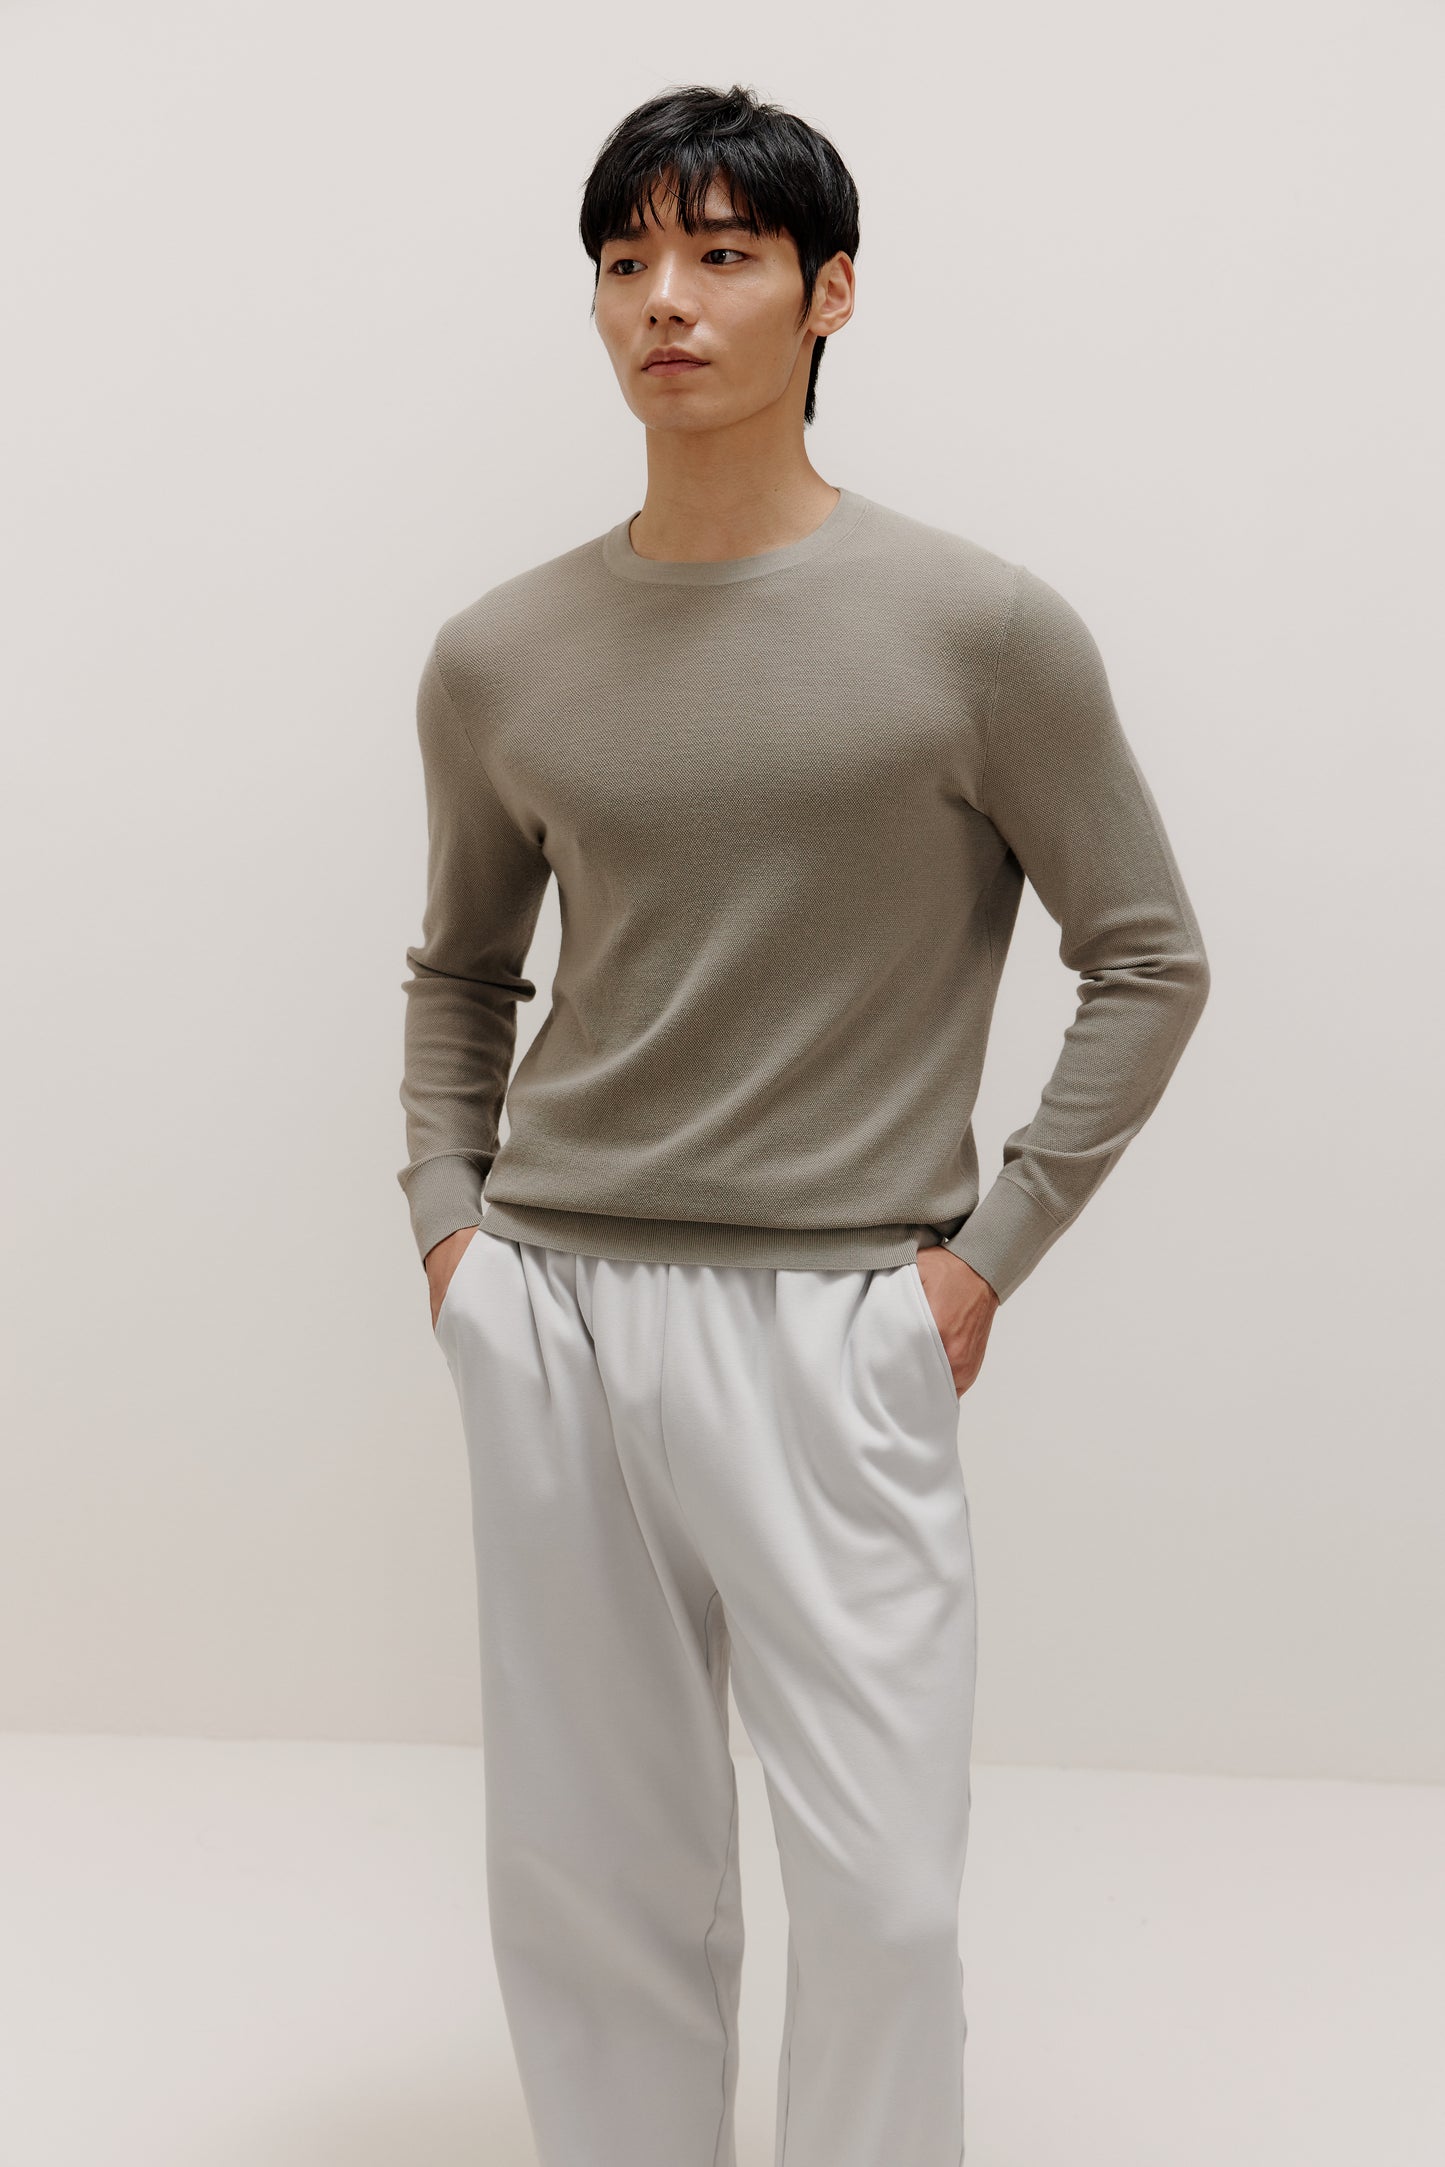 man in khaki sweater and grey pants